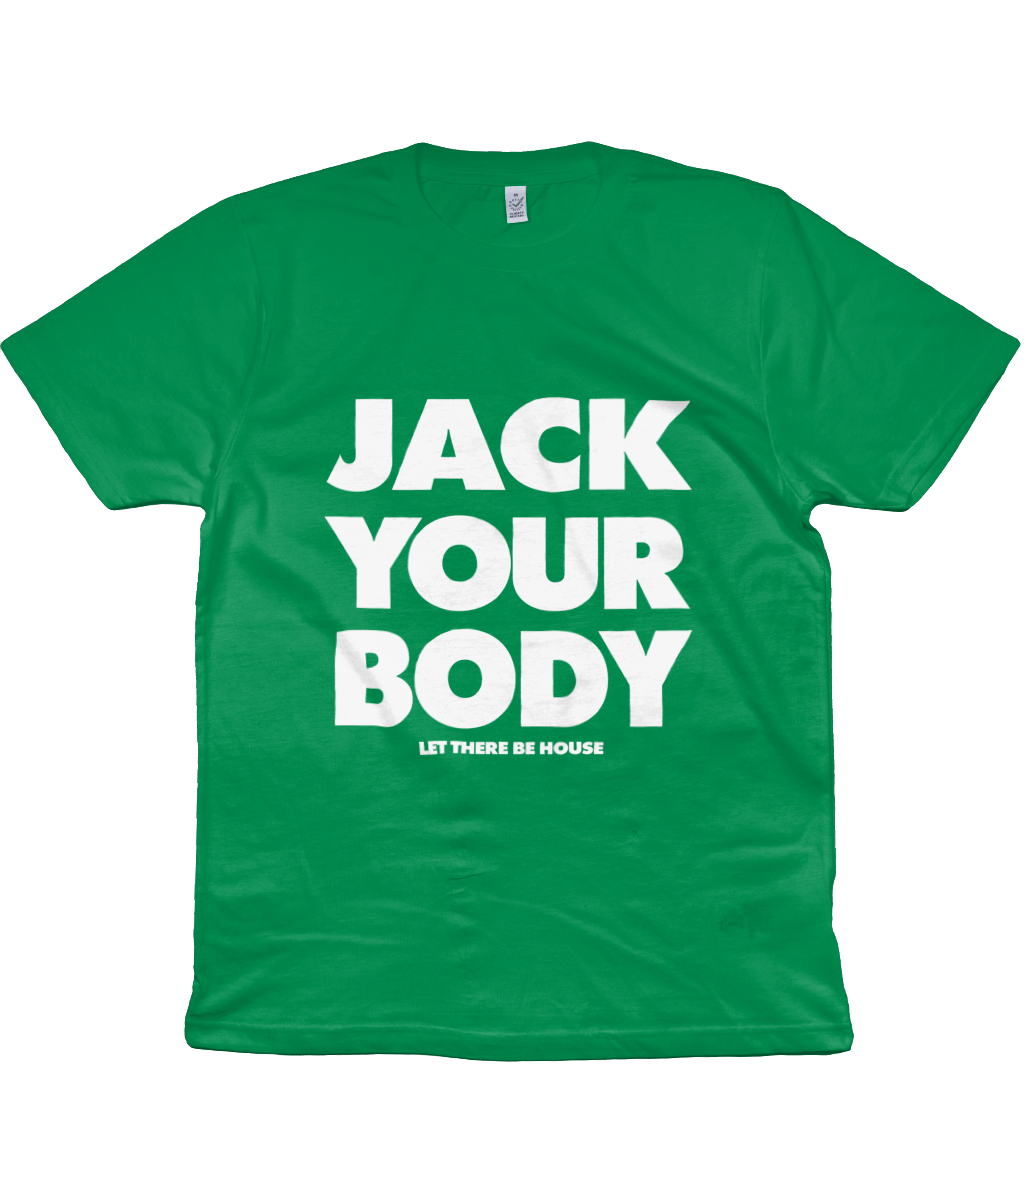 T-Shirt Jack Body White